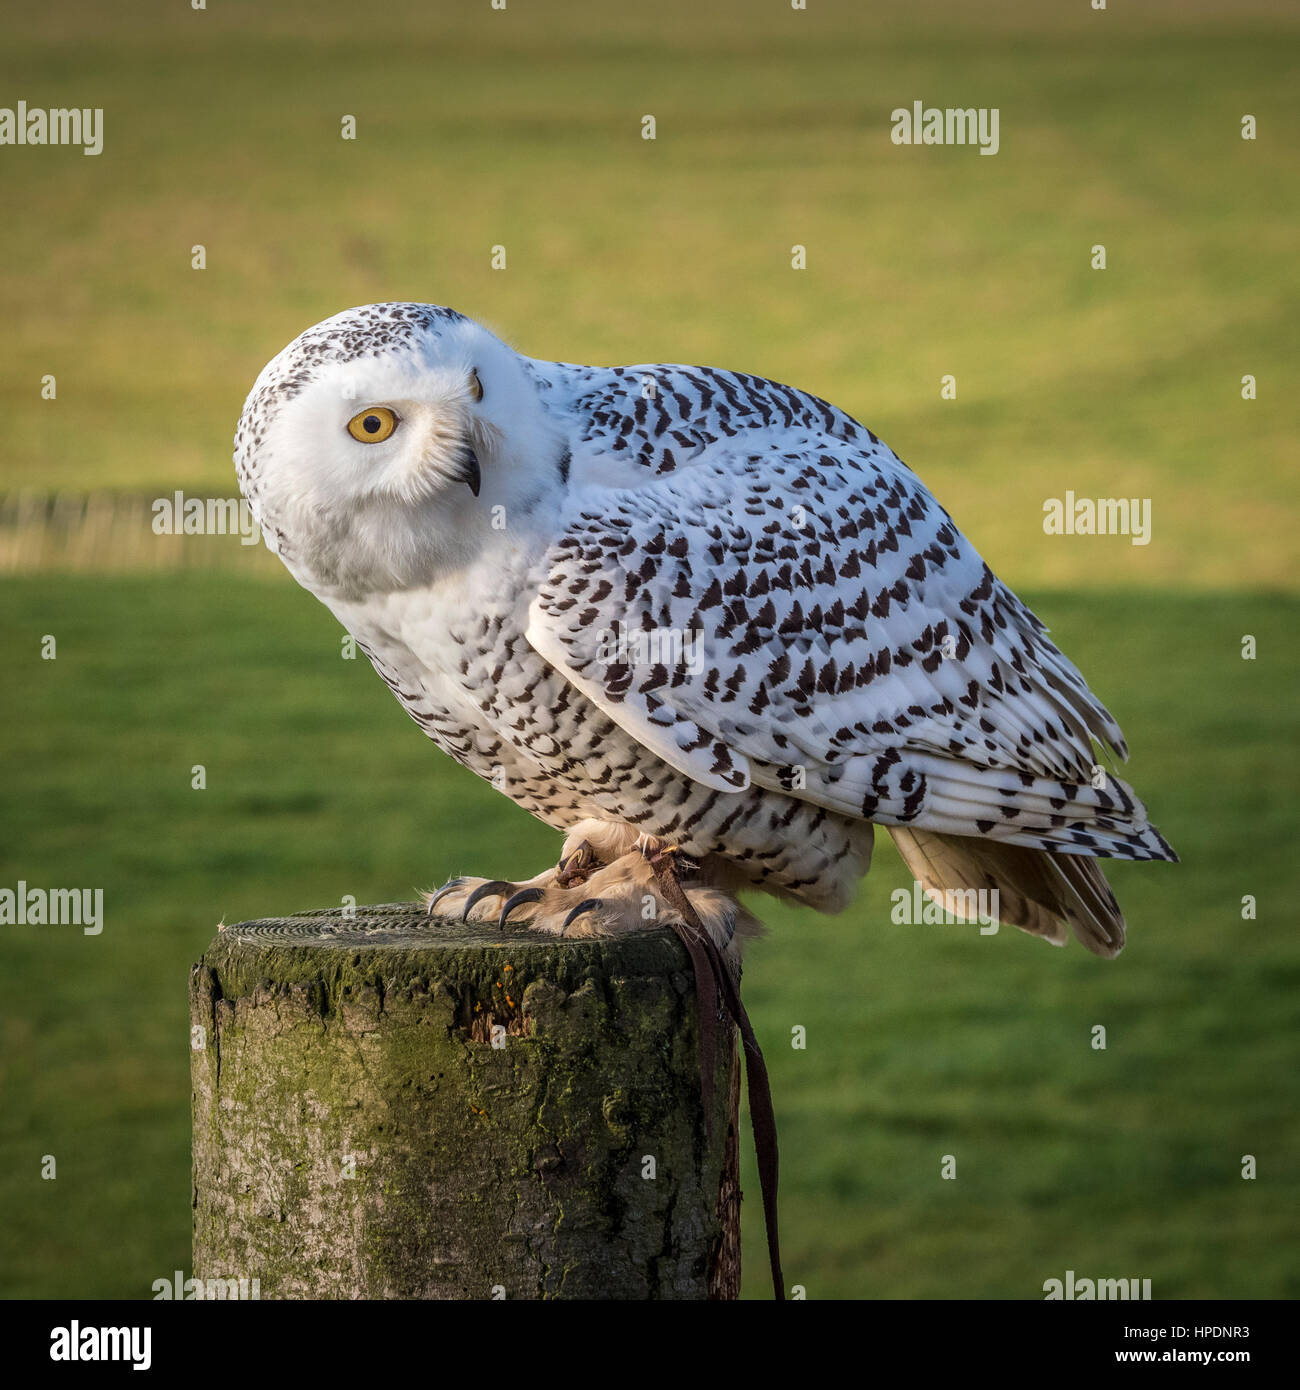 Snowy Owl on perch Stock Photo